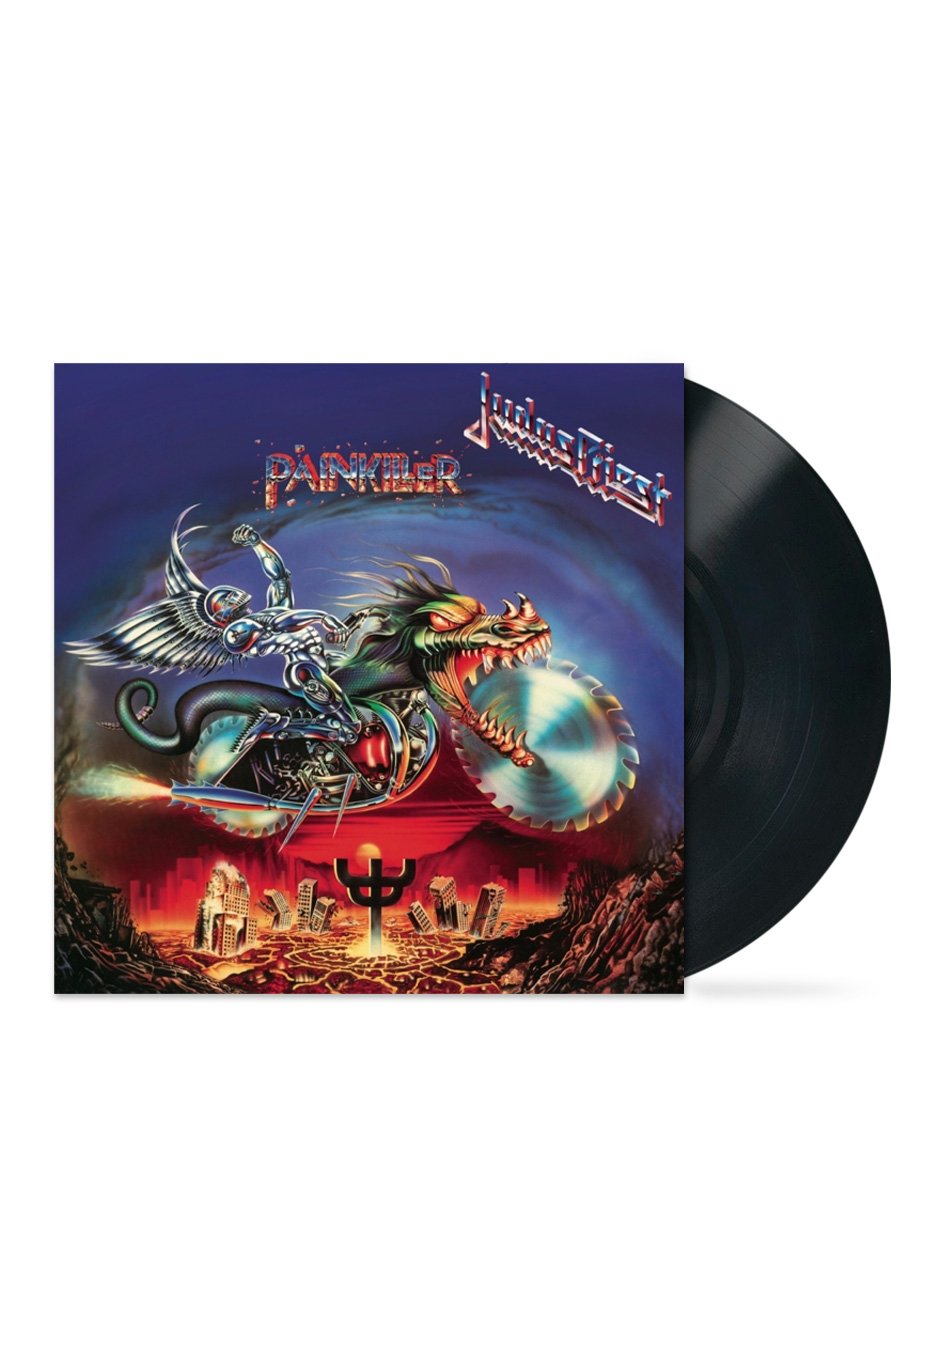 Judas Priest - Painkiller - Vinyl